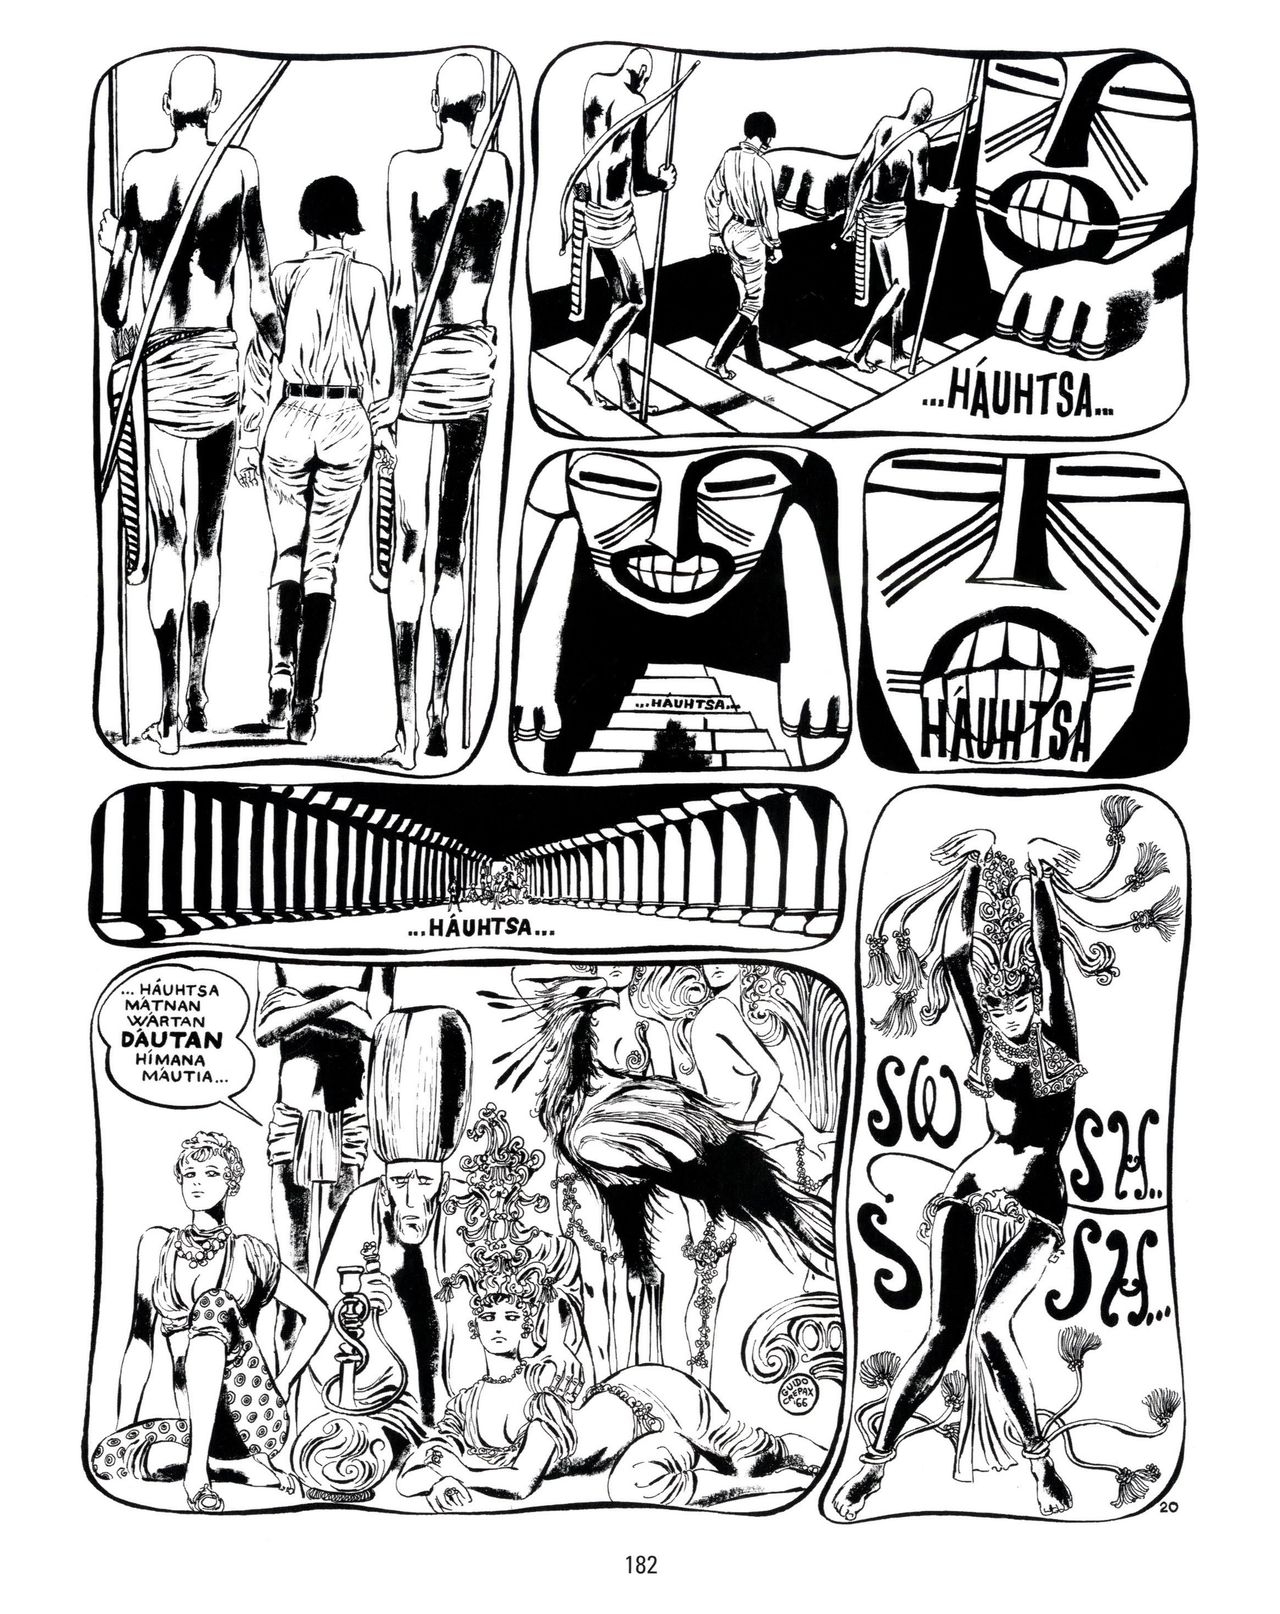 [Guido Crepax] Erotica Fumetti #25 : L'ascesa dei sotterranei : I cavalieri ciechi [Italian] 183